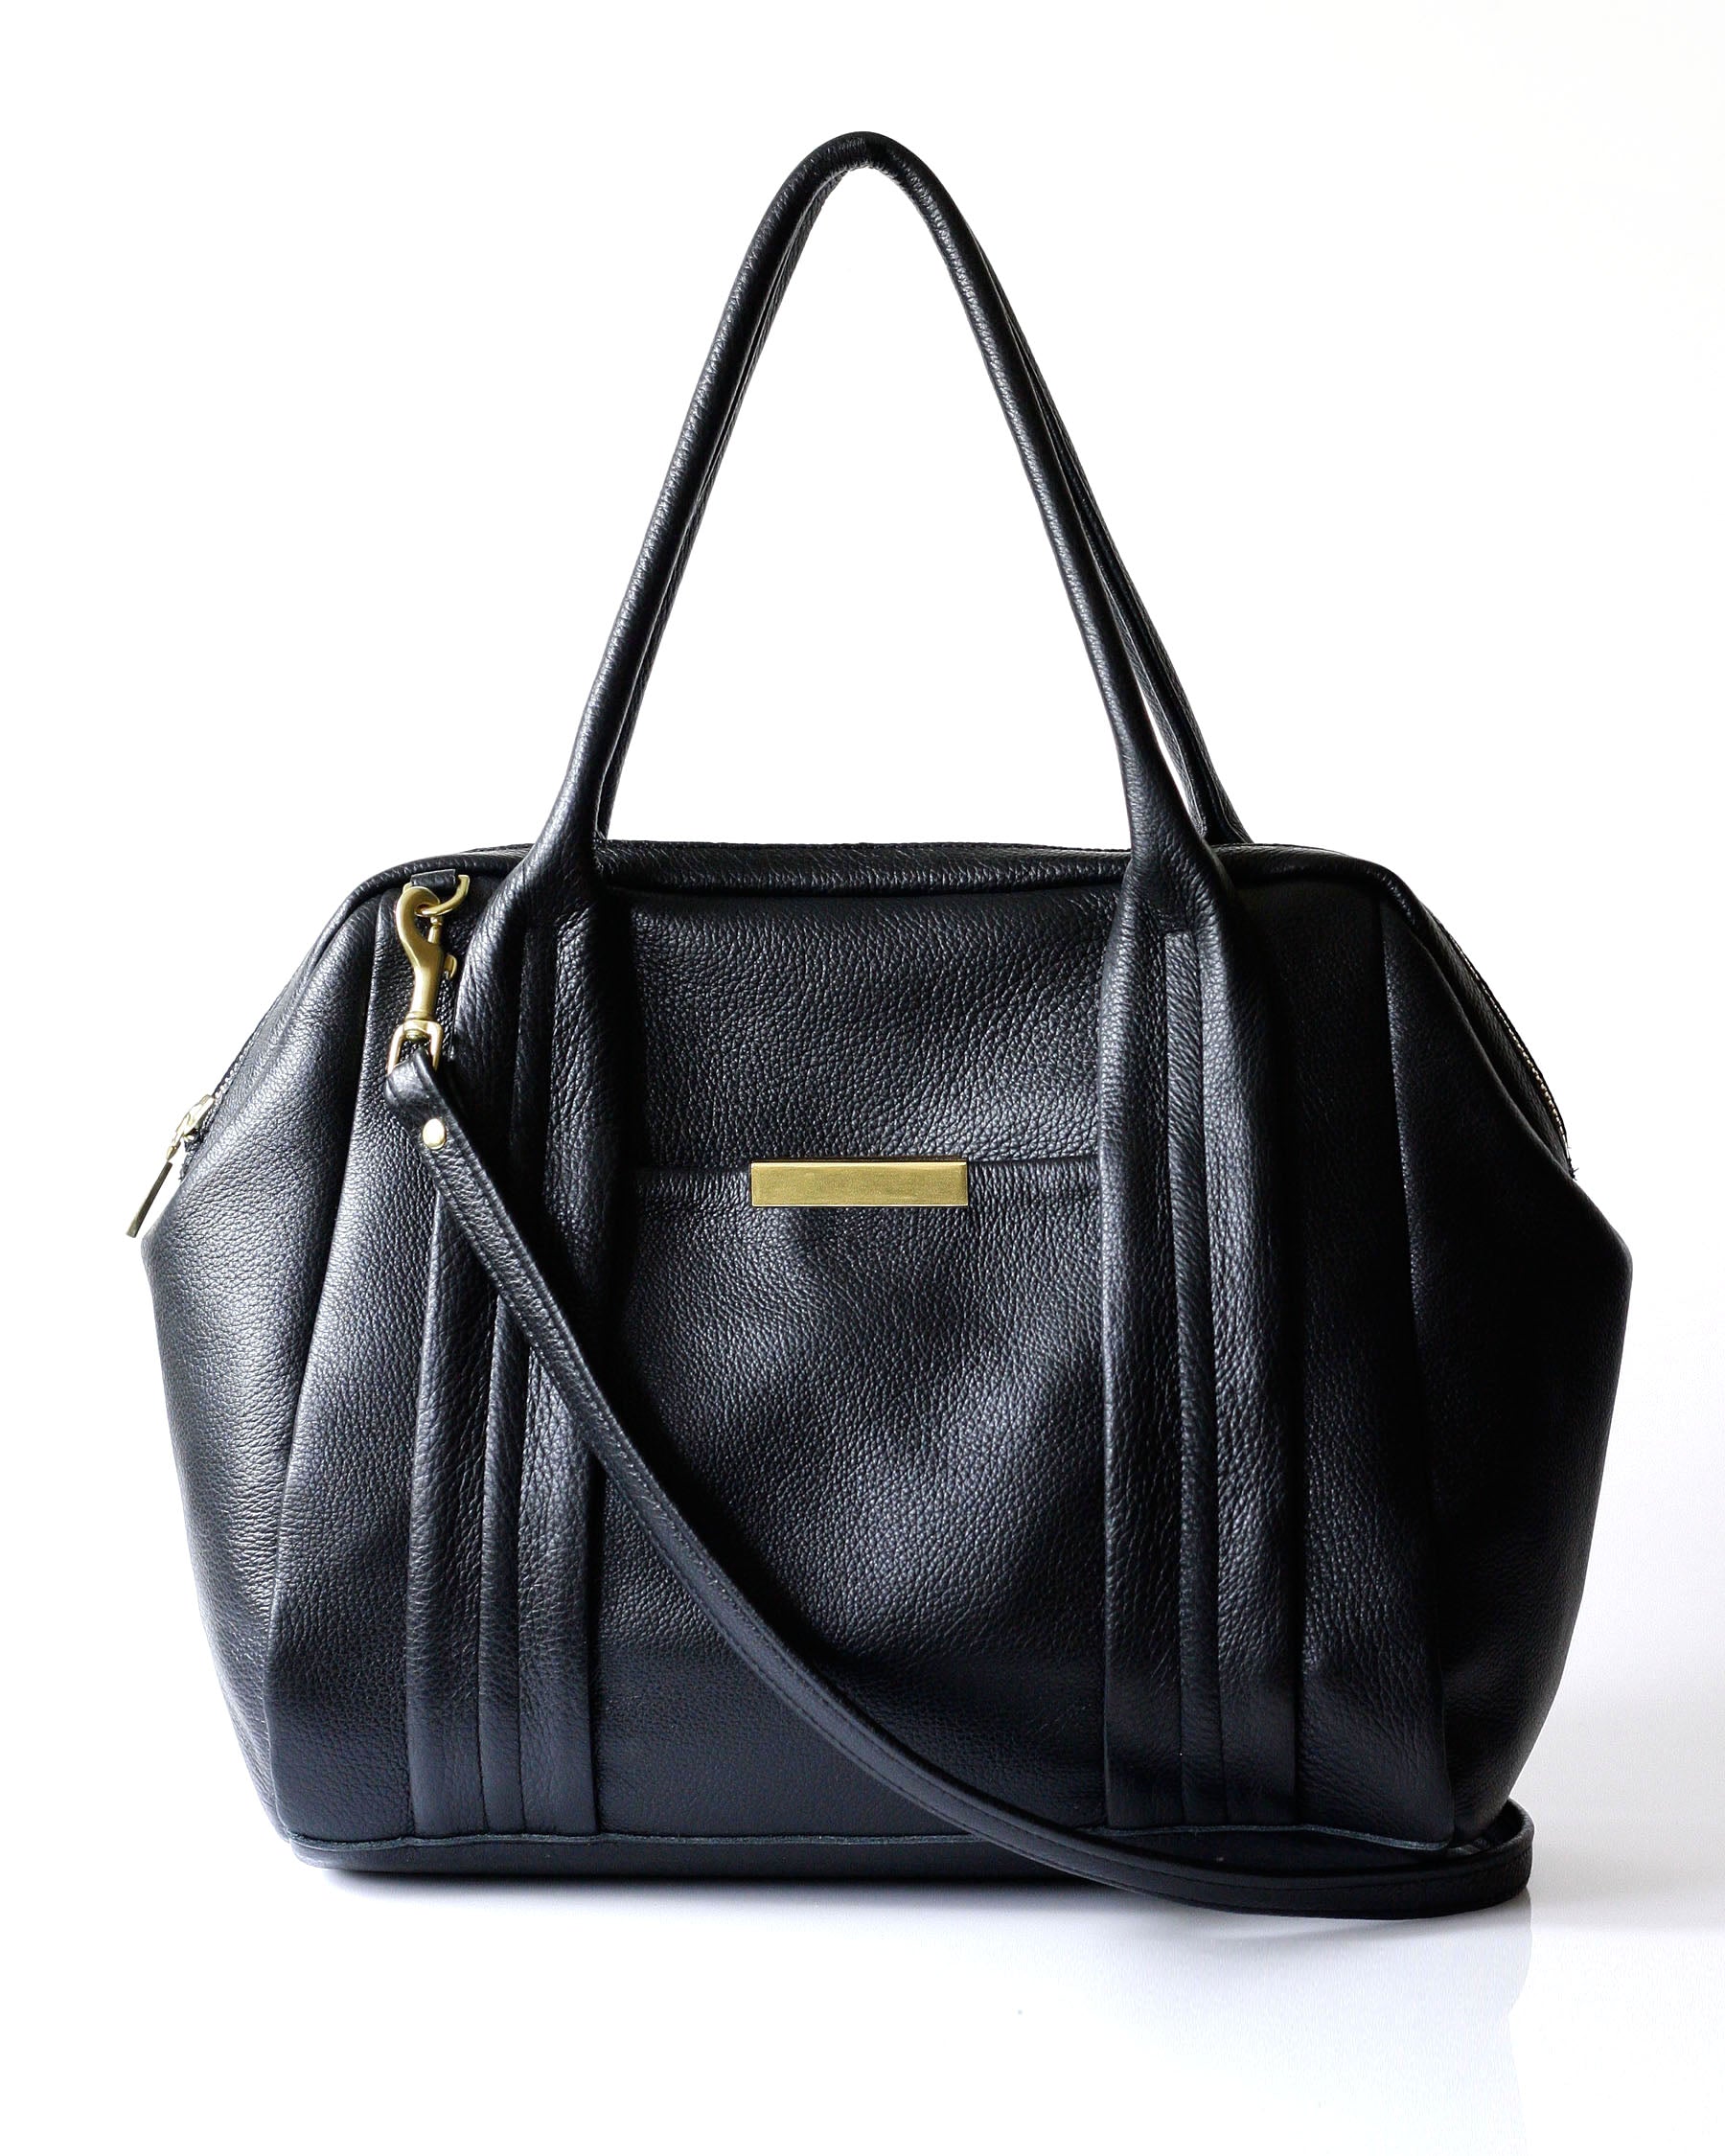 Liria Duffle  Fashion, Luxury fashion, Laptop purse